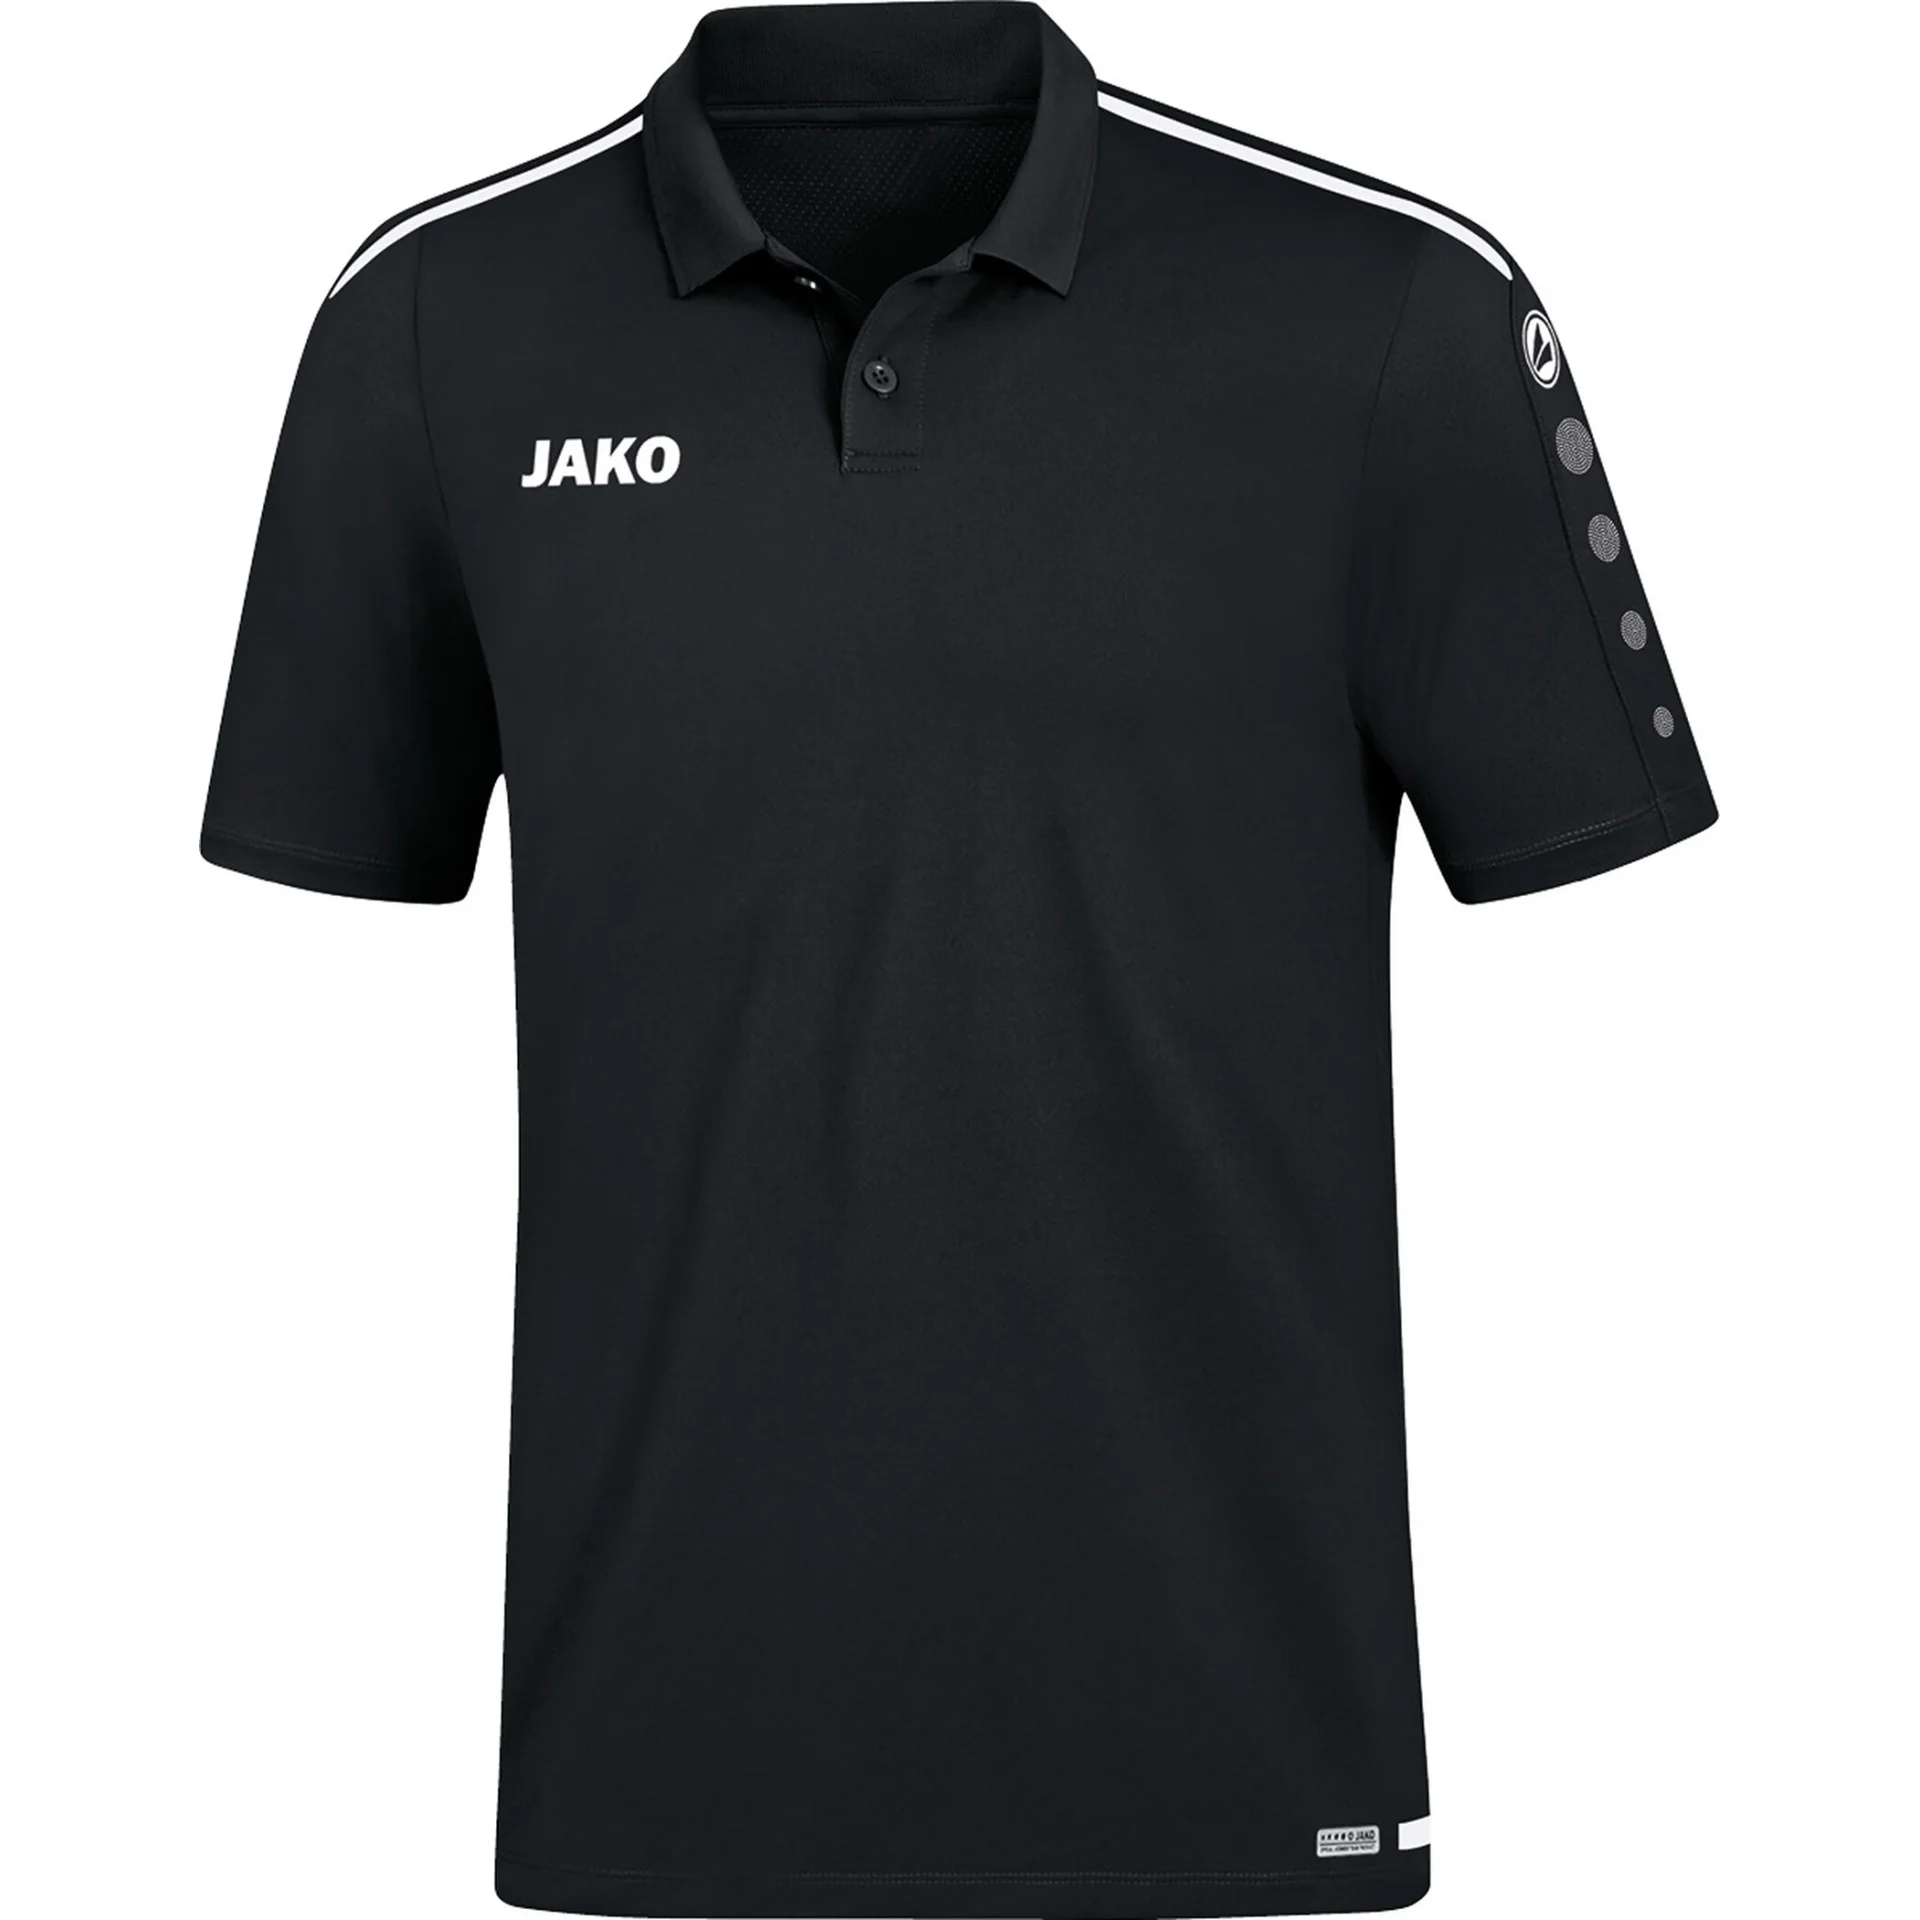 JAKO Fussball___Teamsport_Textil___Poloshirts_Striker_20_Poloshirt 6319 08 schwarz/weiß